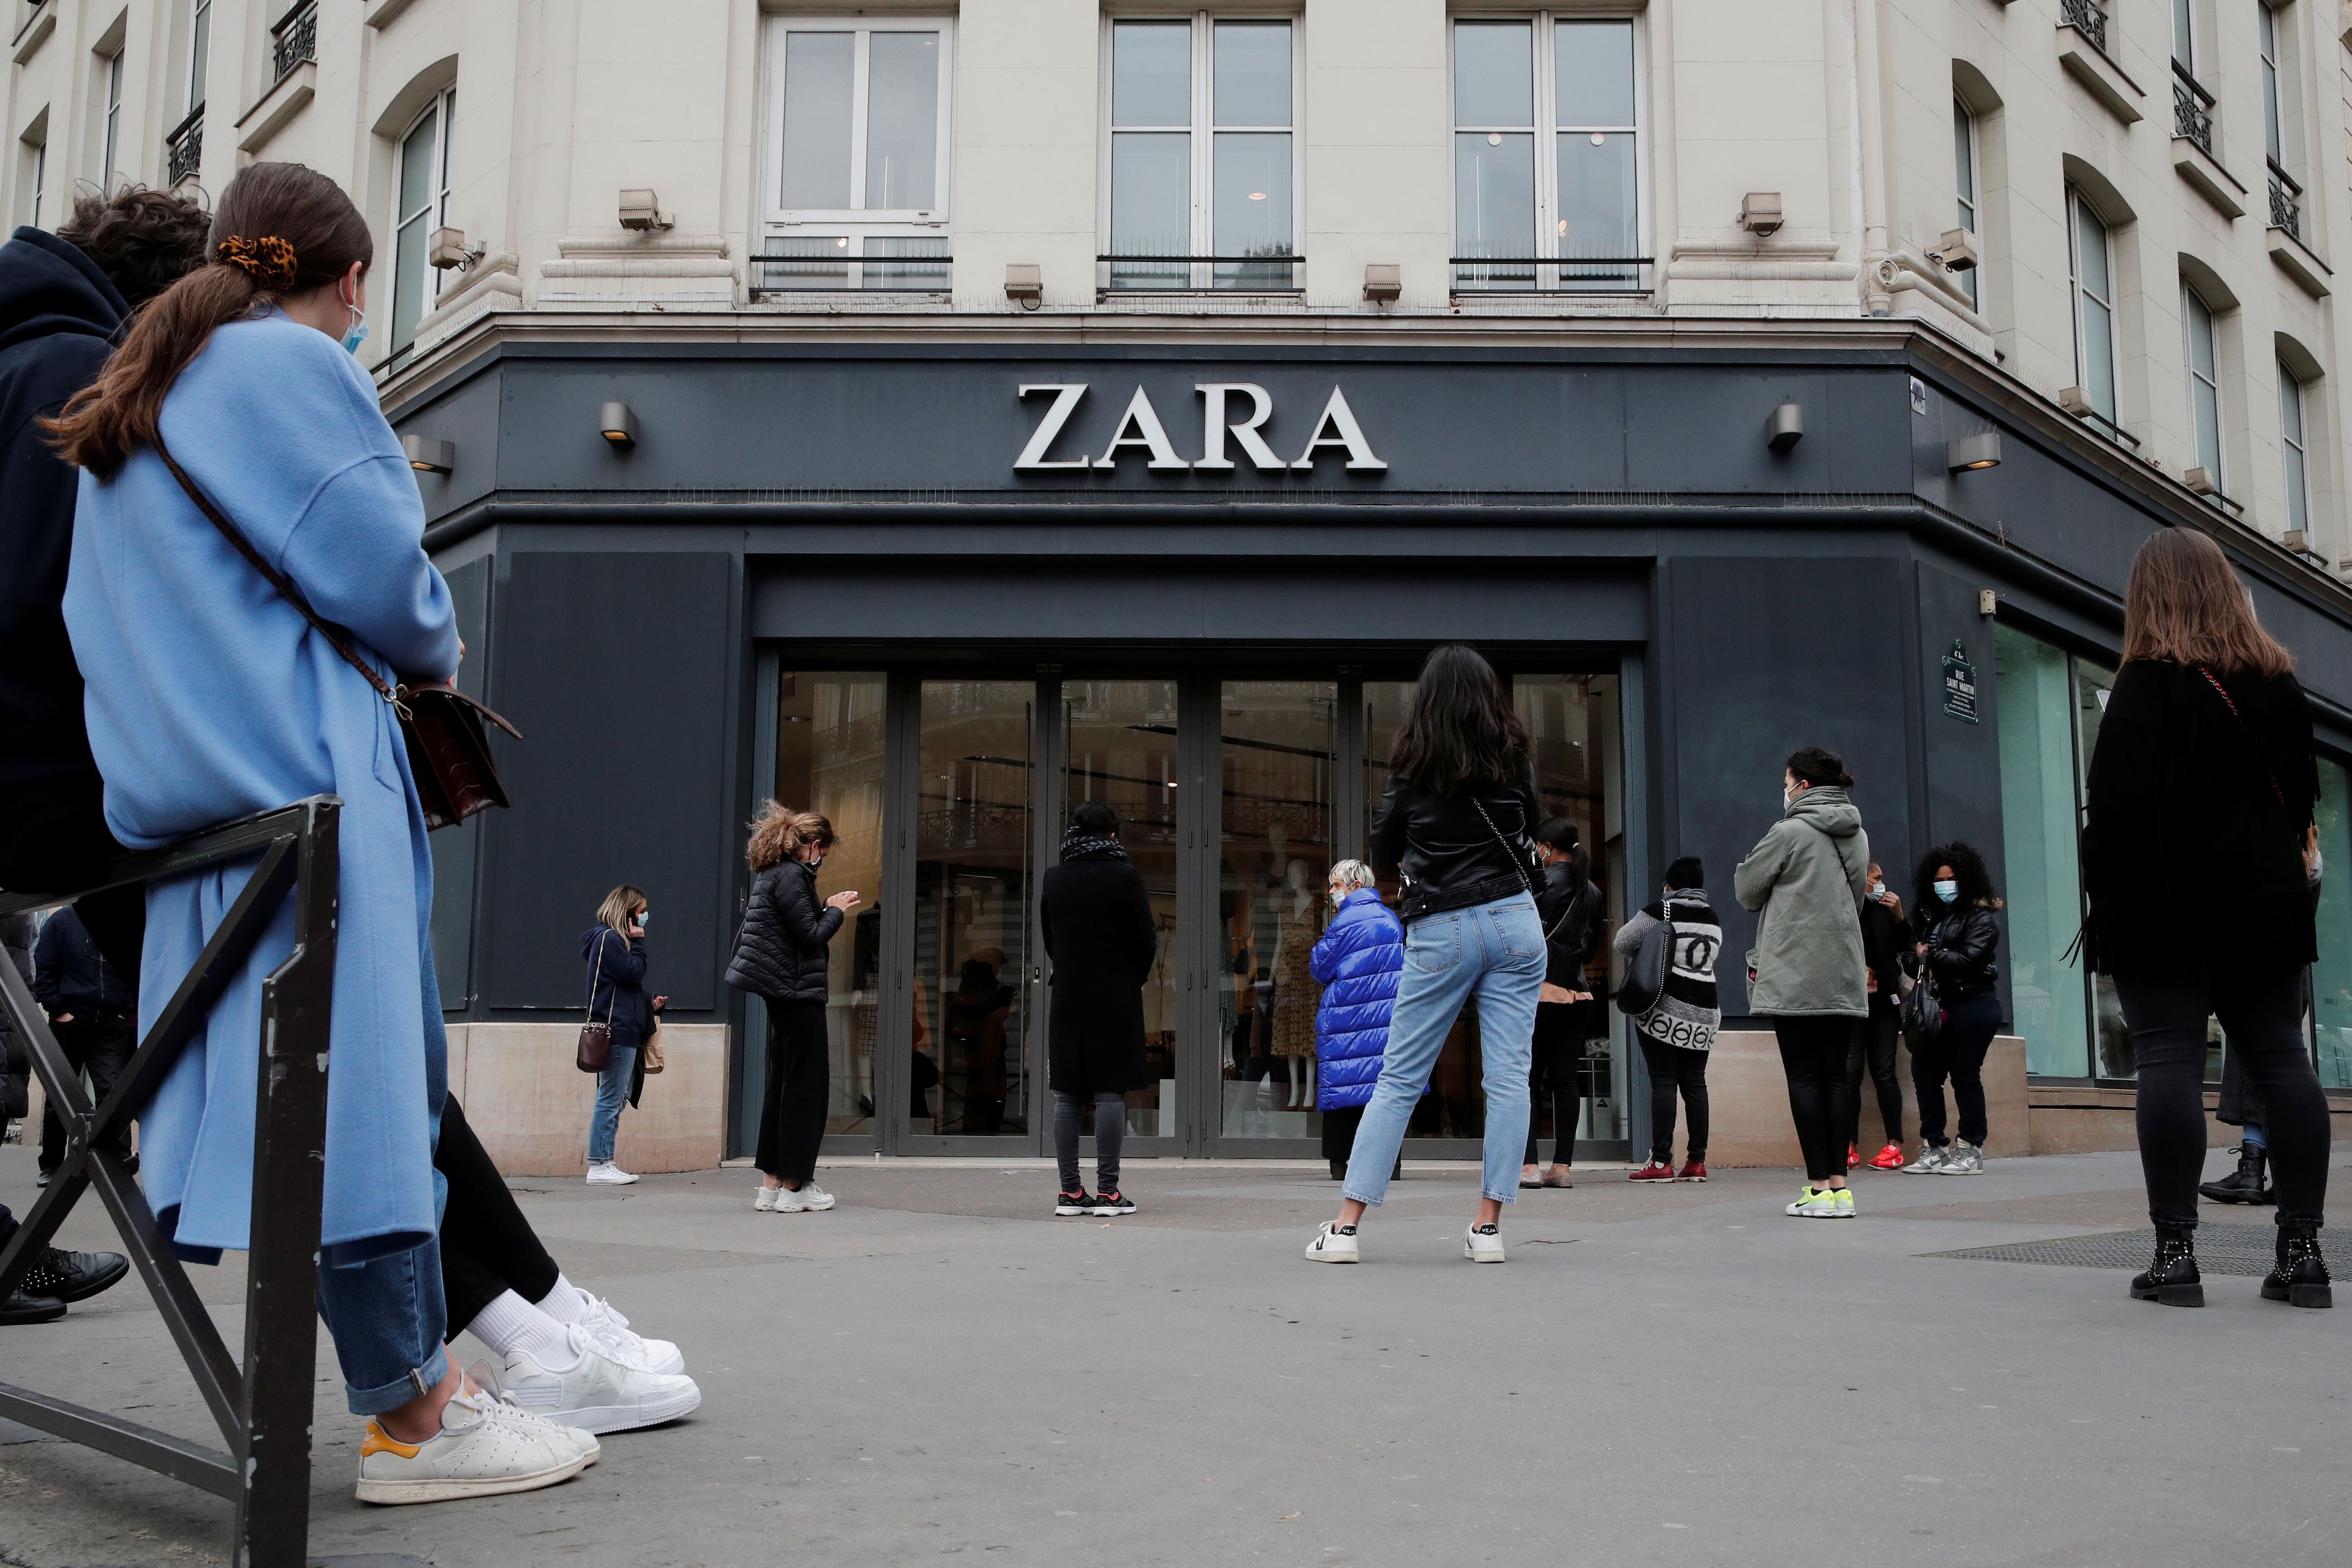 En imagen, tienda Zara.